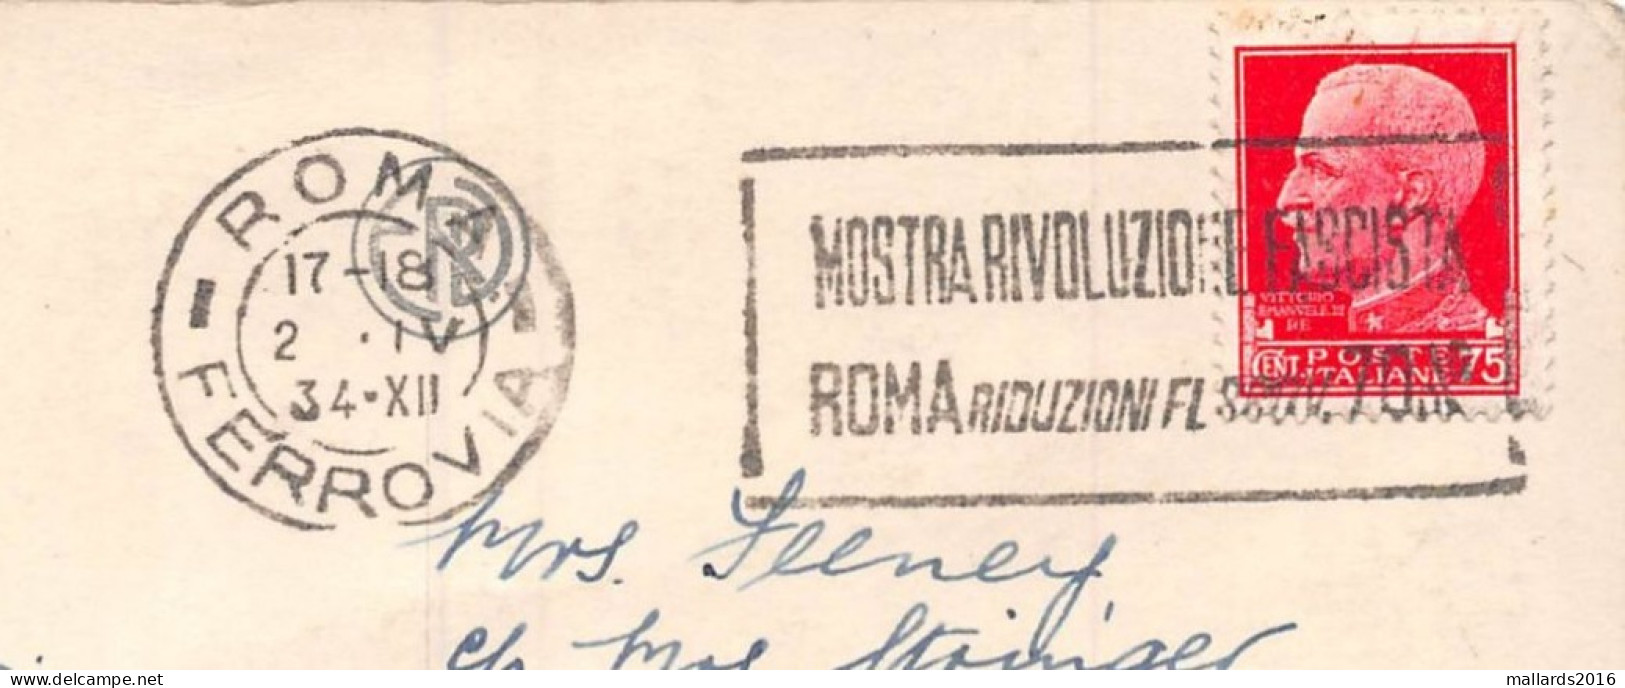 MOSTRA RIVOLUZIOEE FASCISTA, ROMA - FERROVIA 1934 (FACIST REVOLUTIONARY EXHIBITION) - SLOGAN POSTMARK #240221 - Reclame